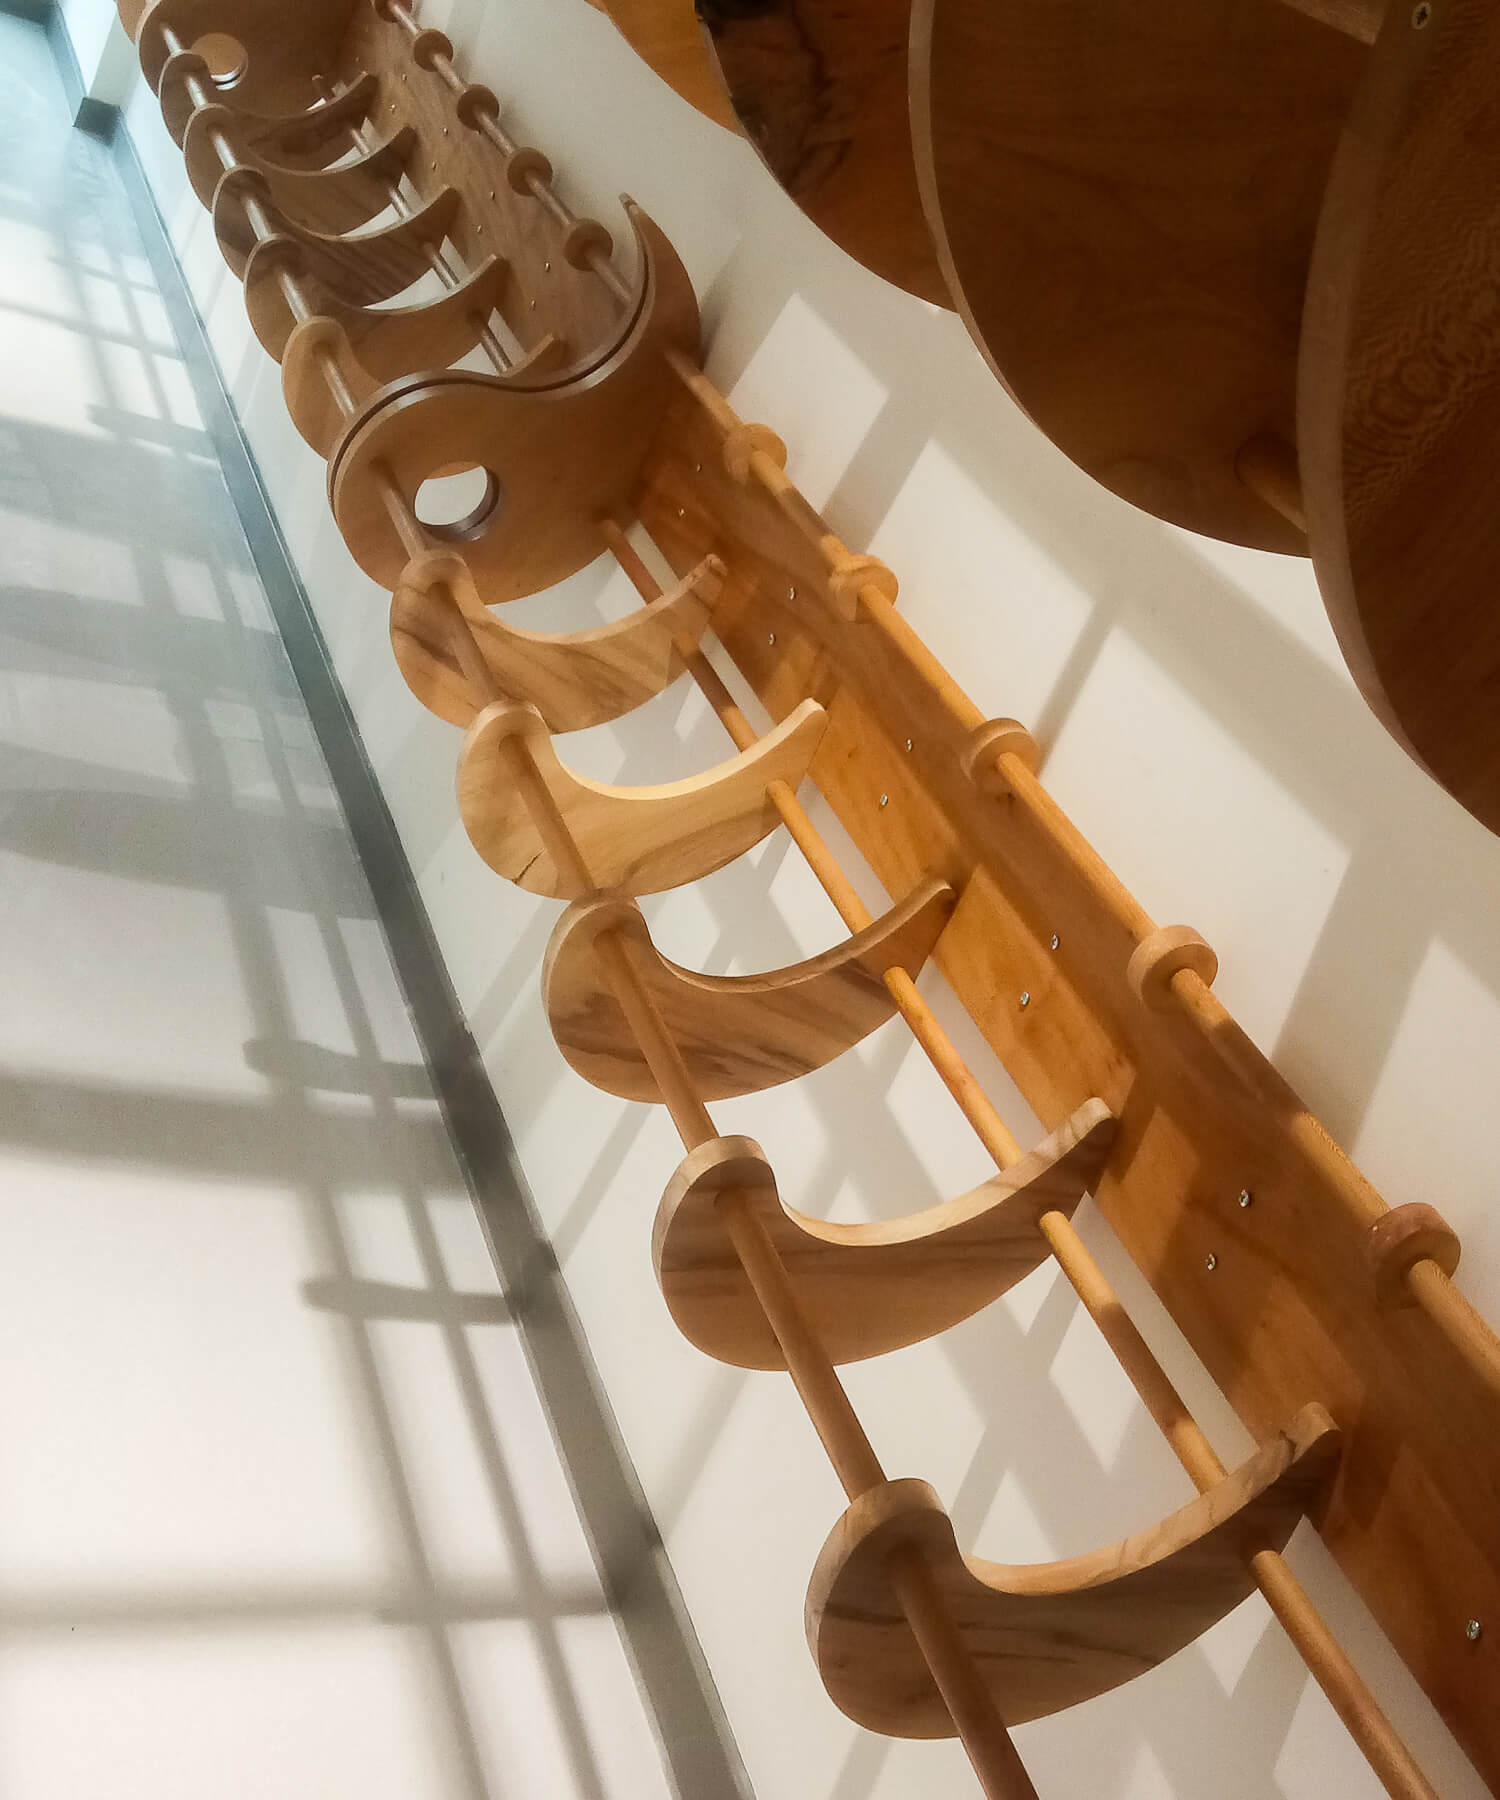 Musical instrument racks made of London plane timber